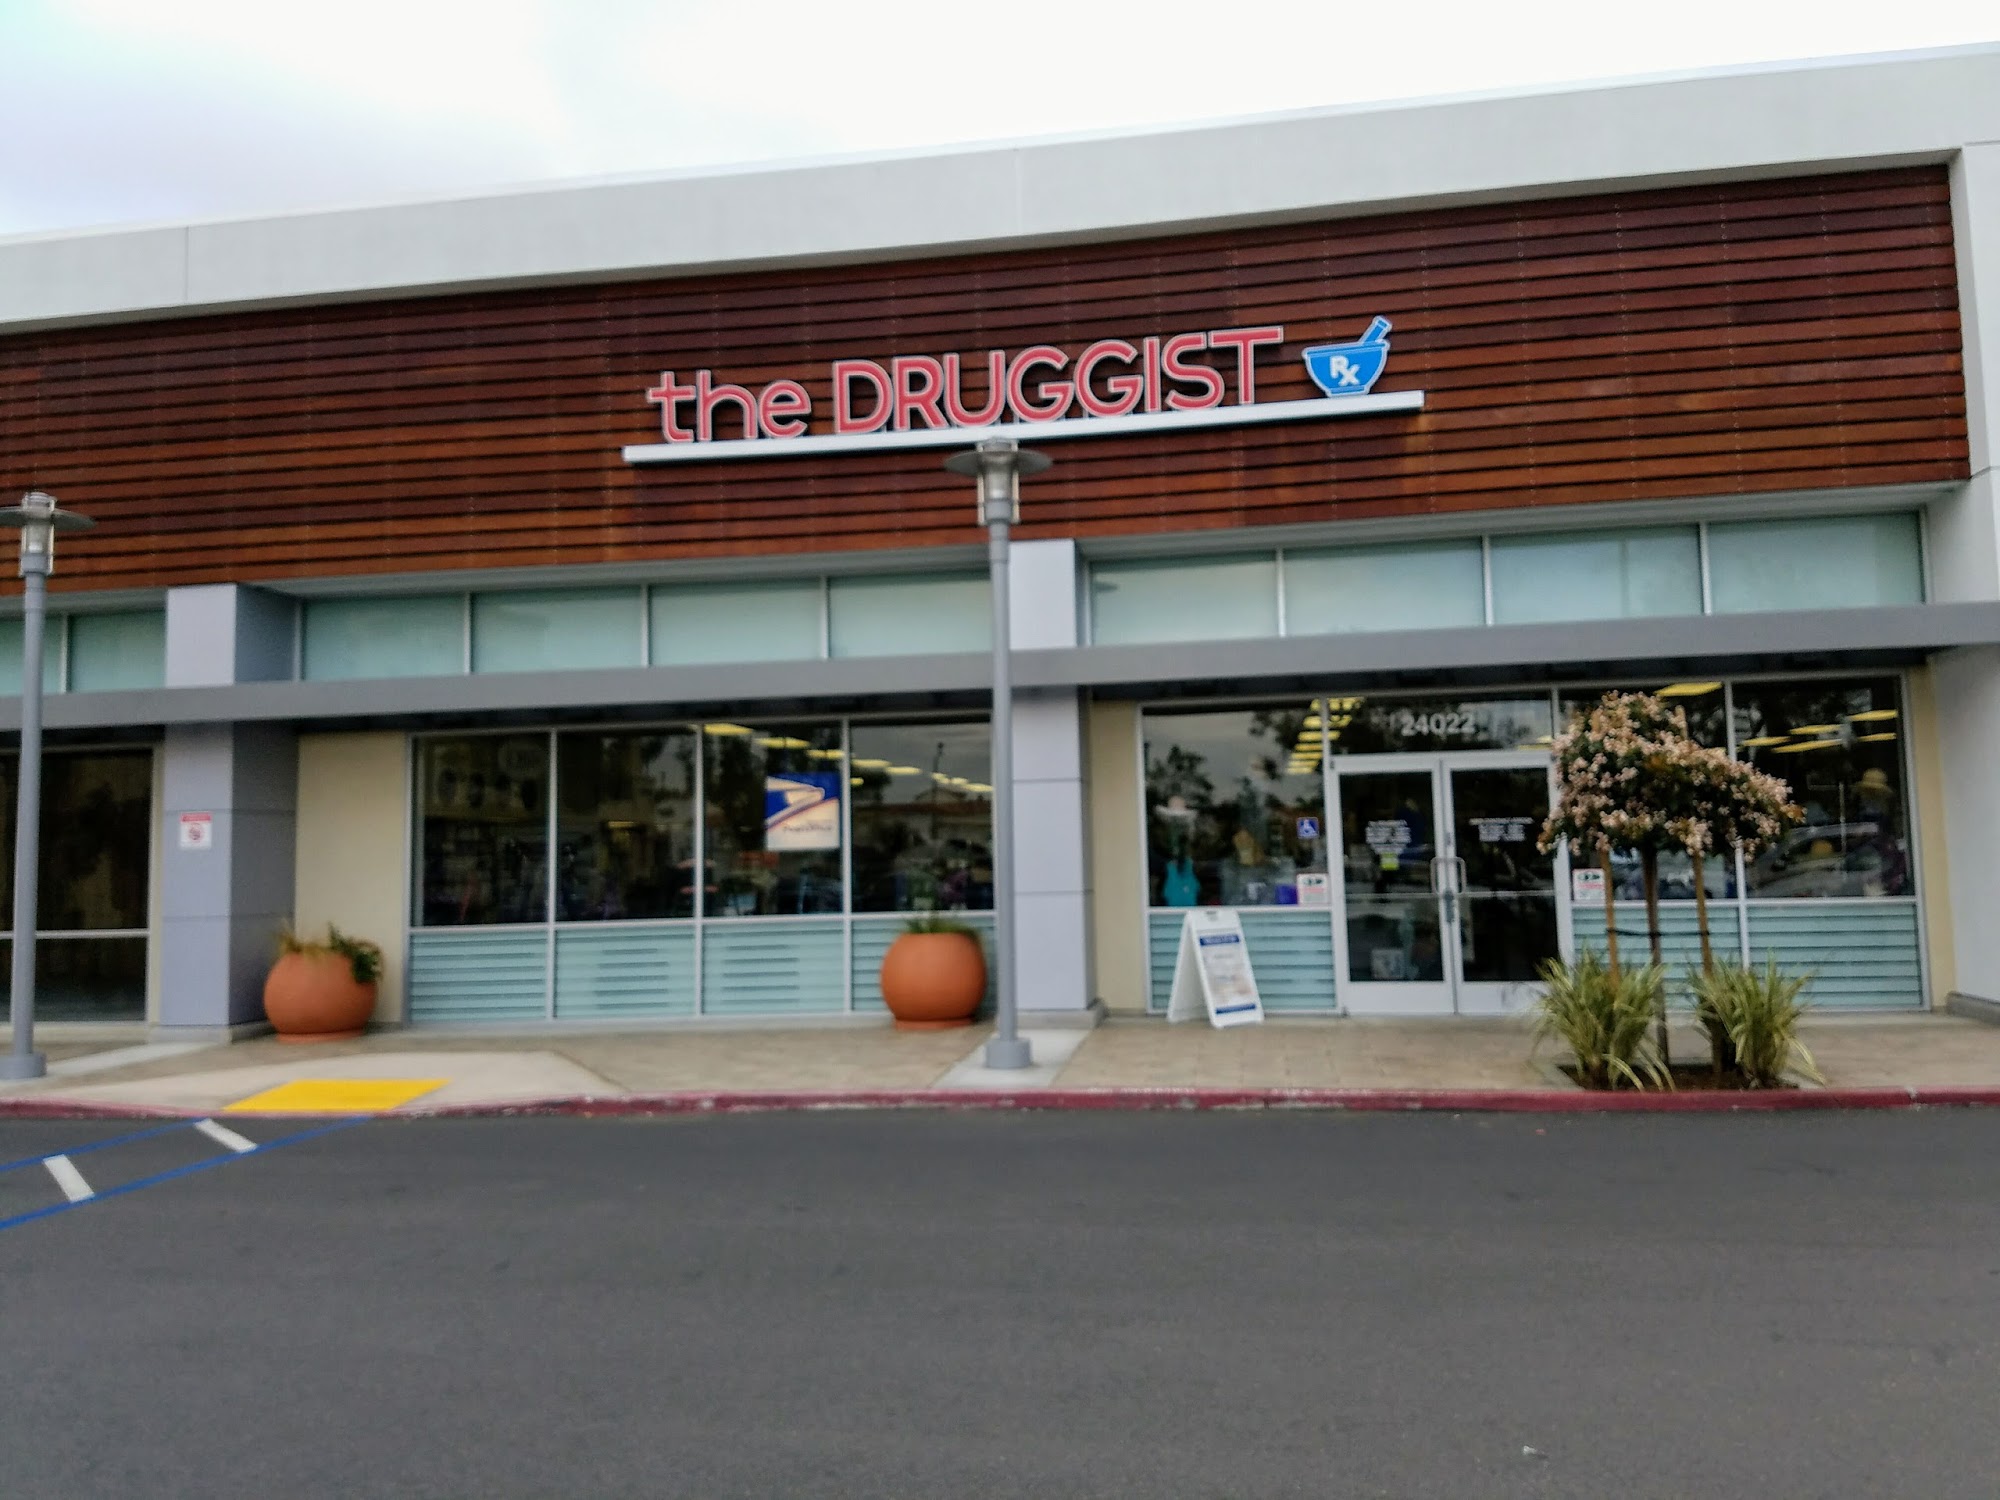 The Druggist